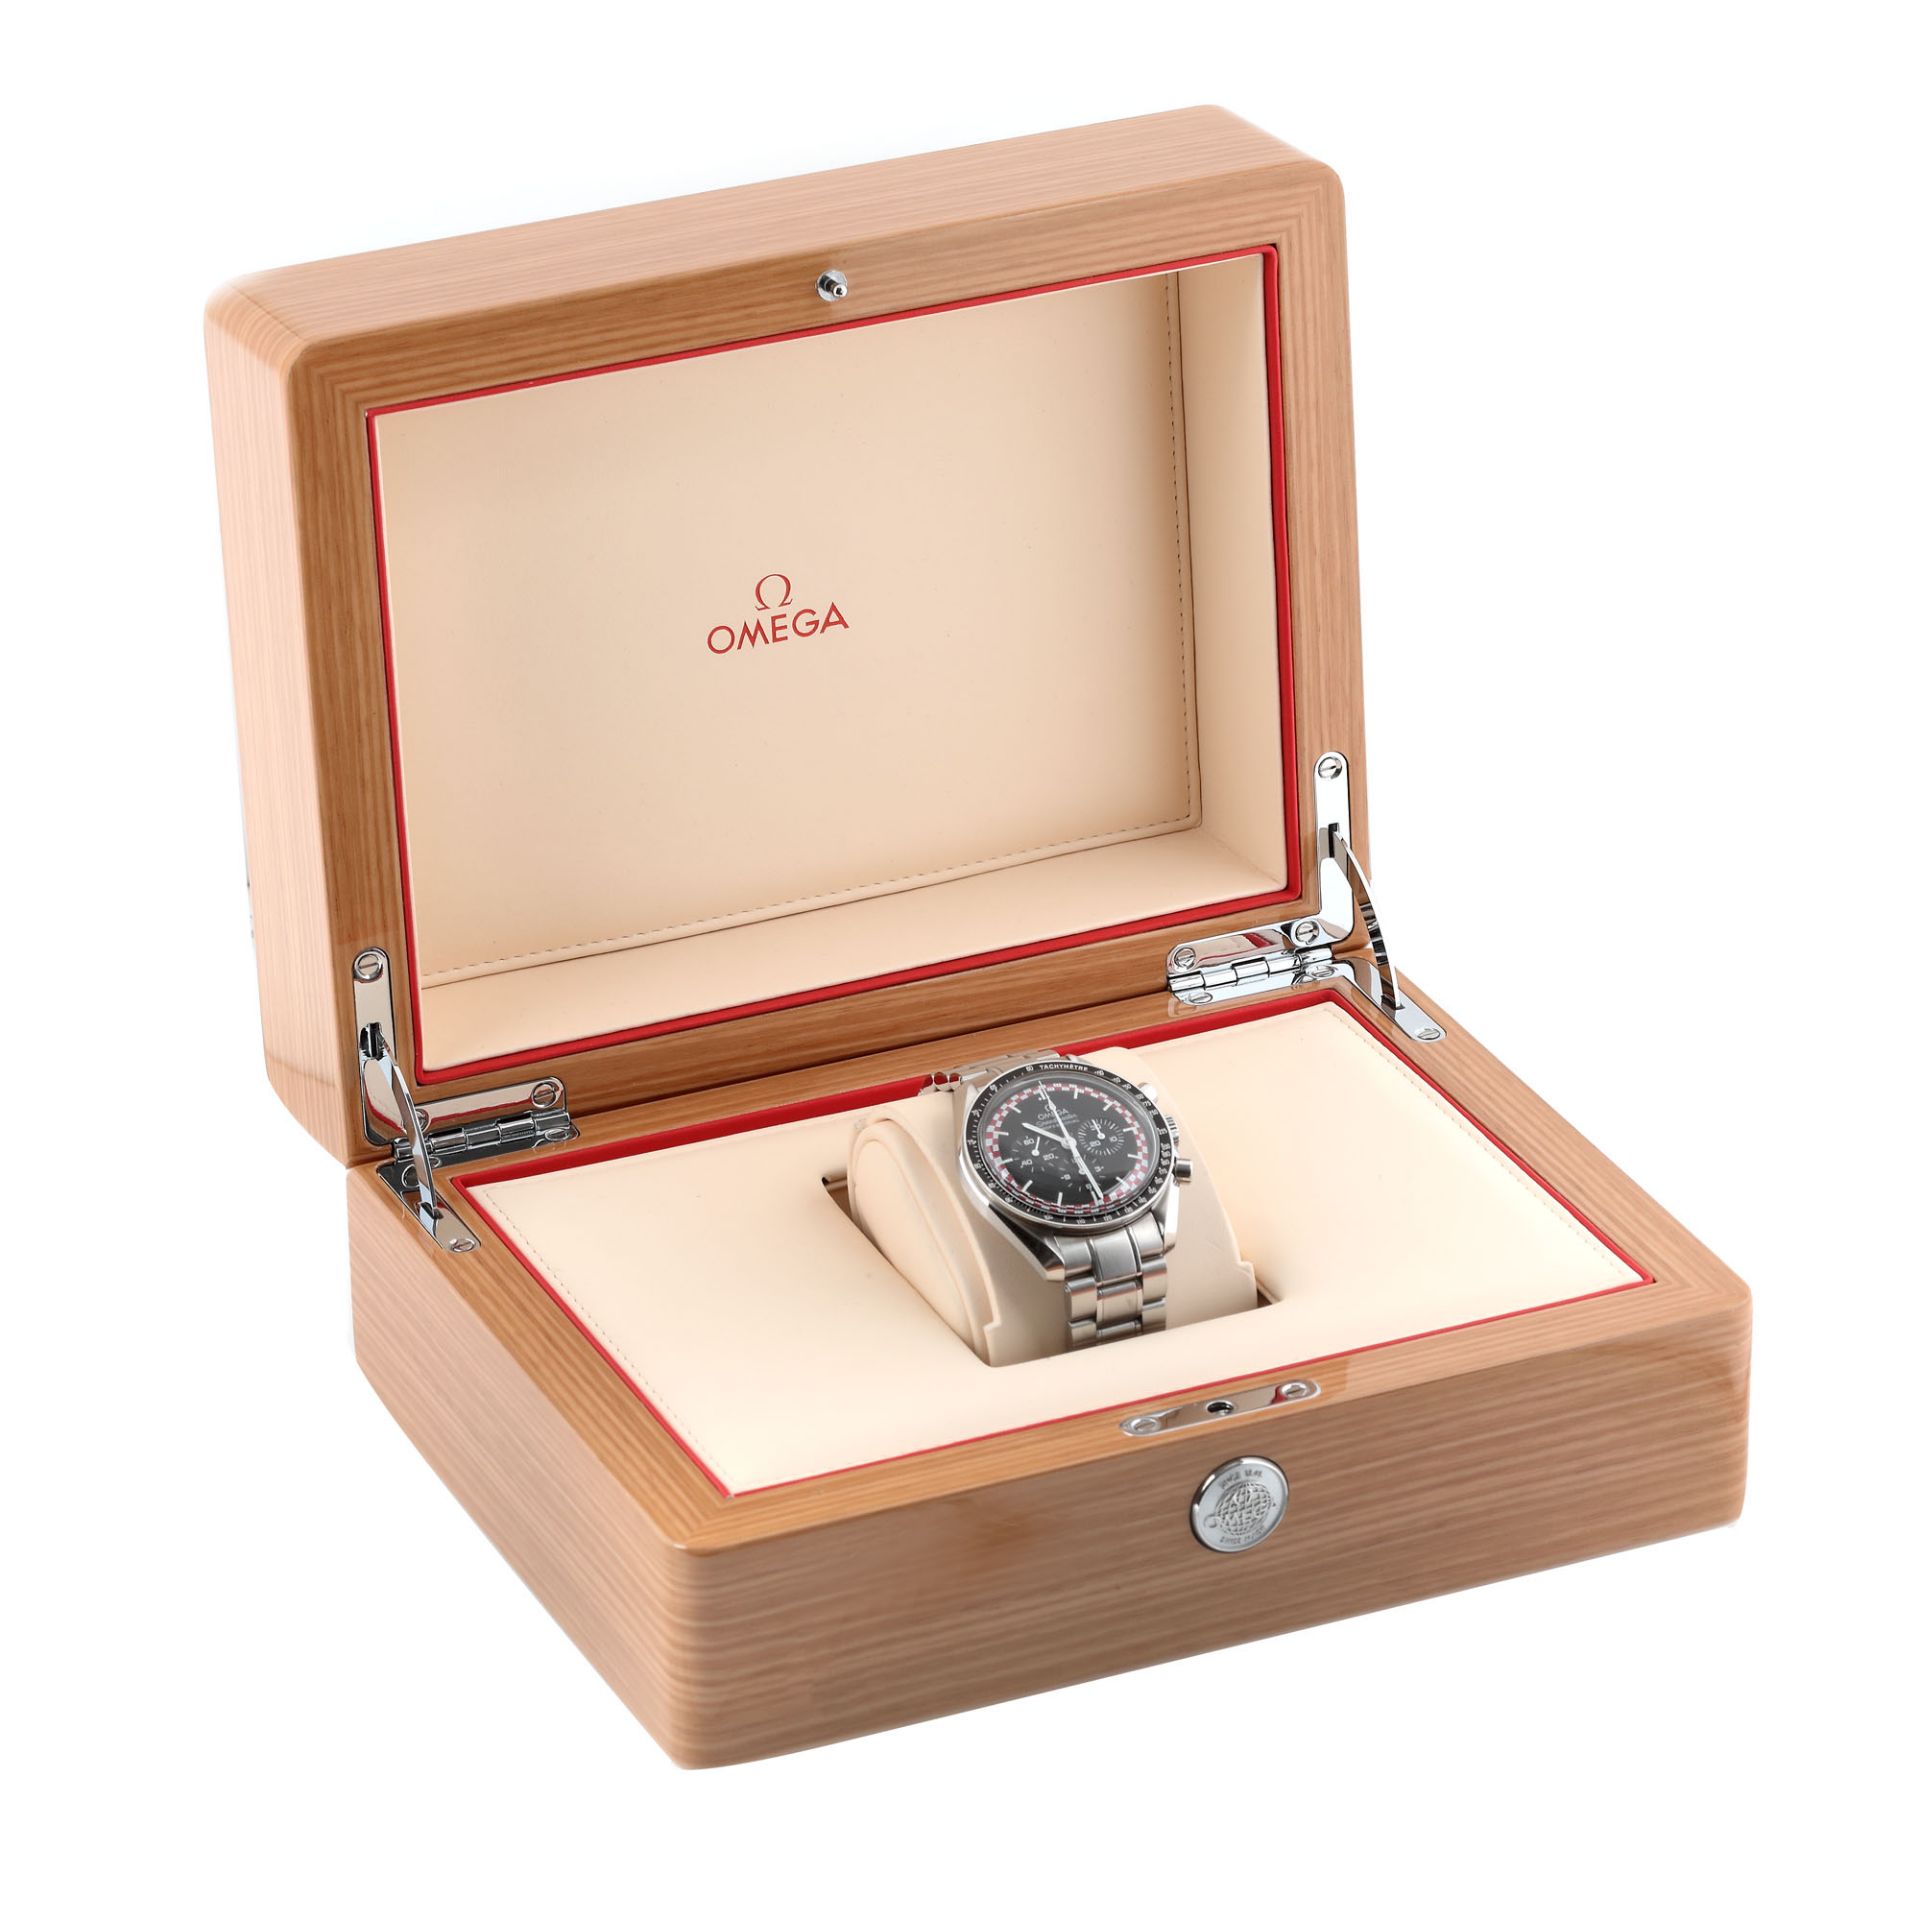 Omega Speedmaster Professional Moonwatch "TinTin" wristwatch, men, original box, collector's item - Image 2 of 4